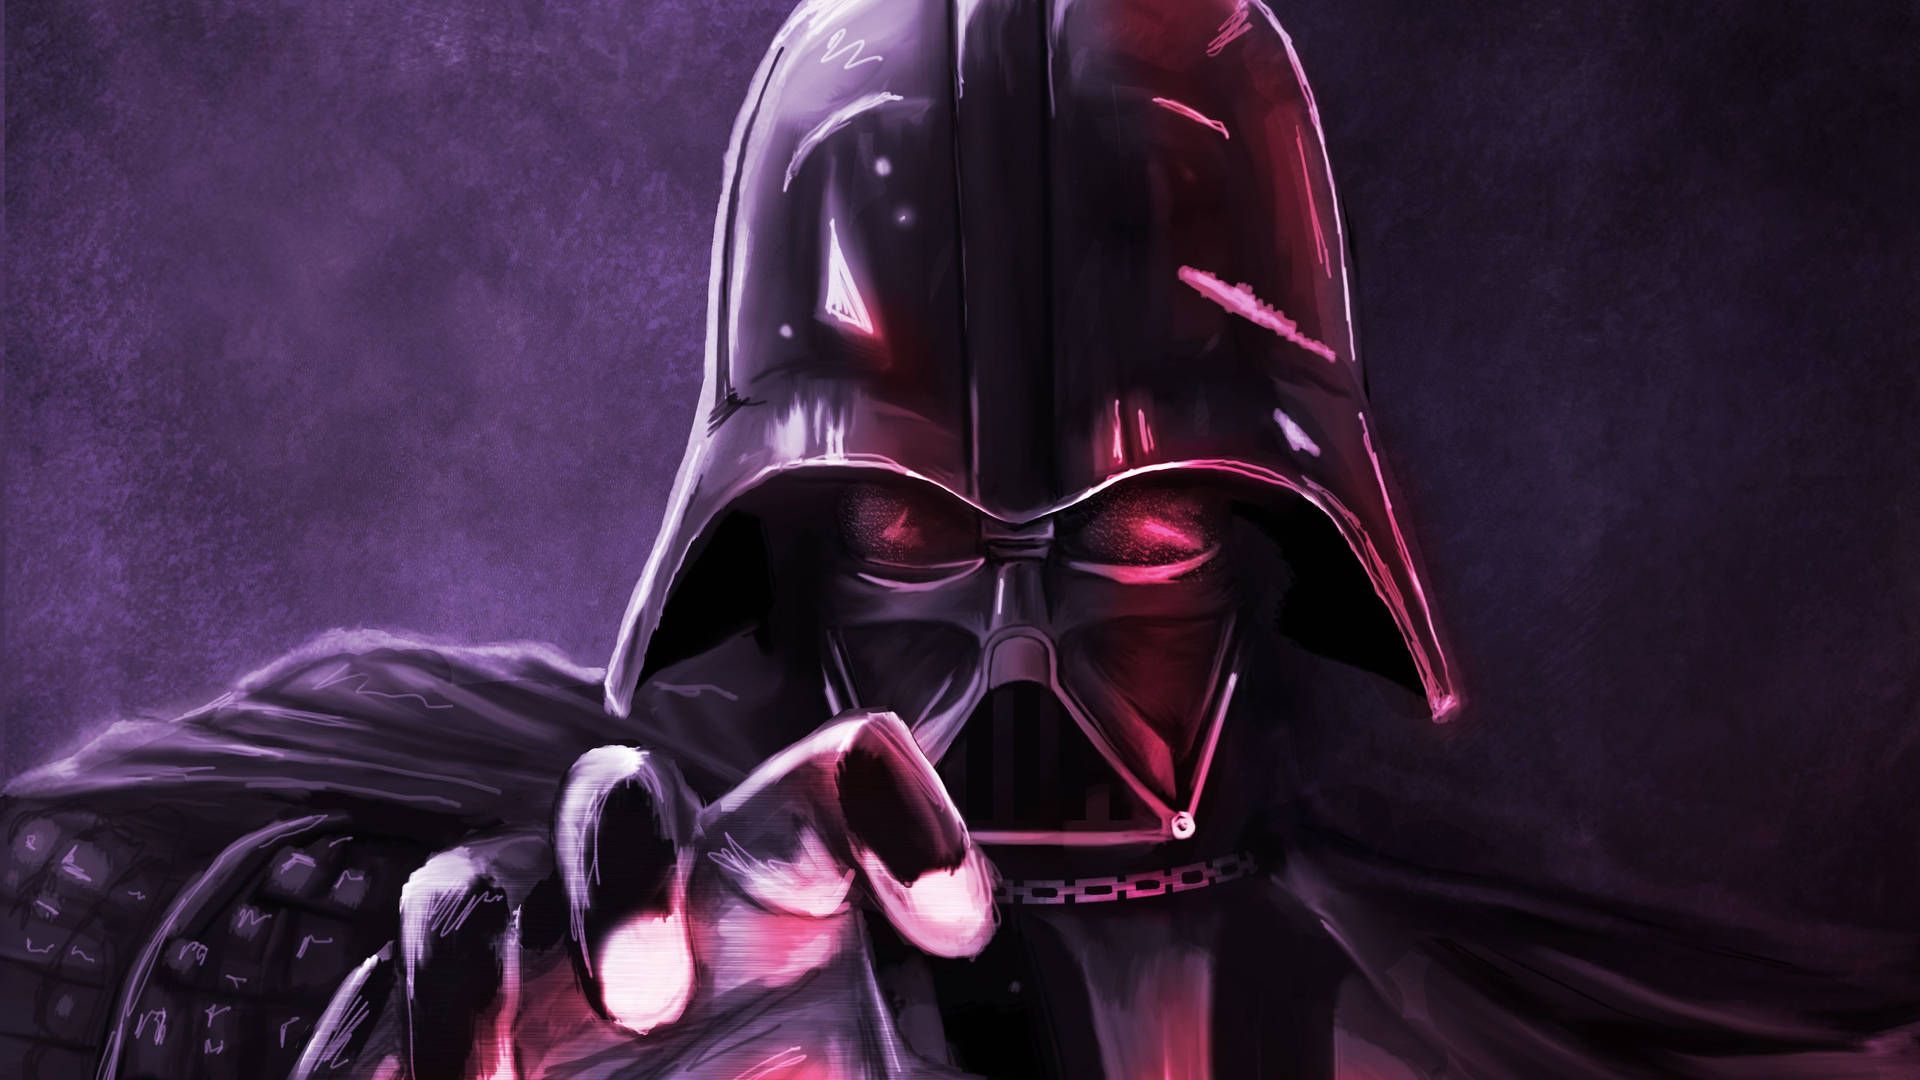 Download free Download Darth Vader